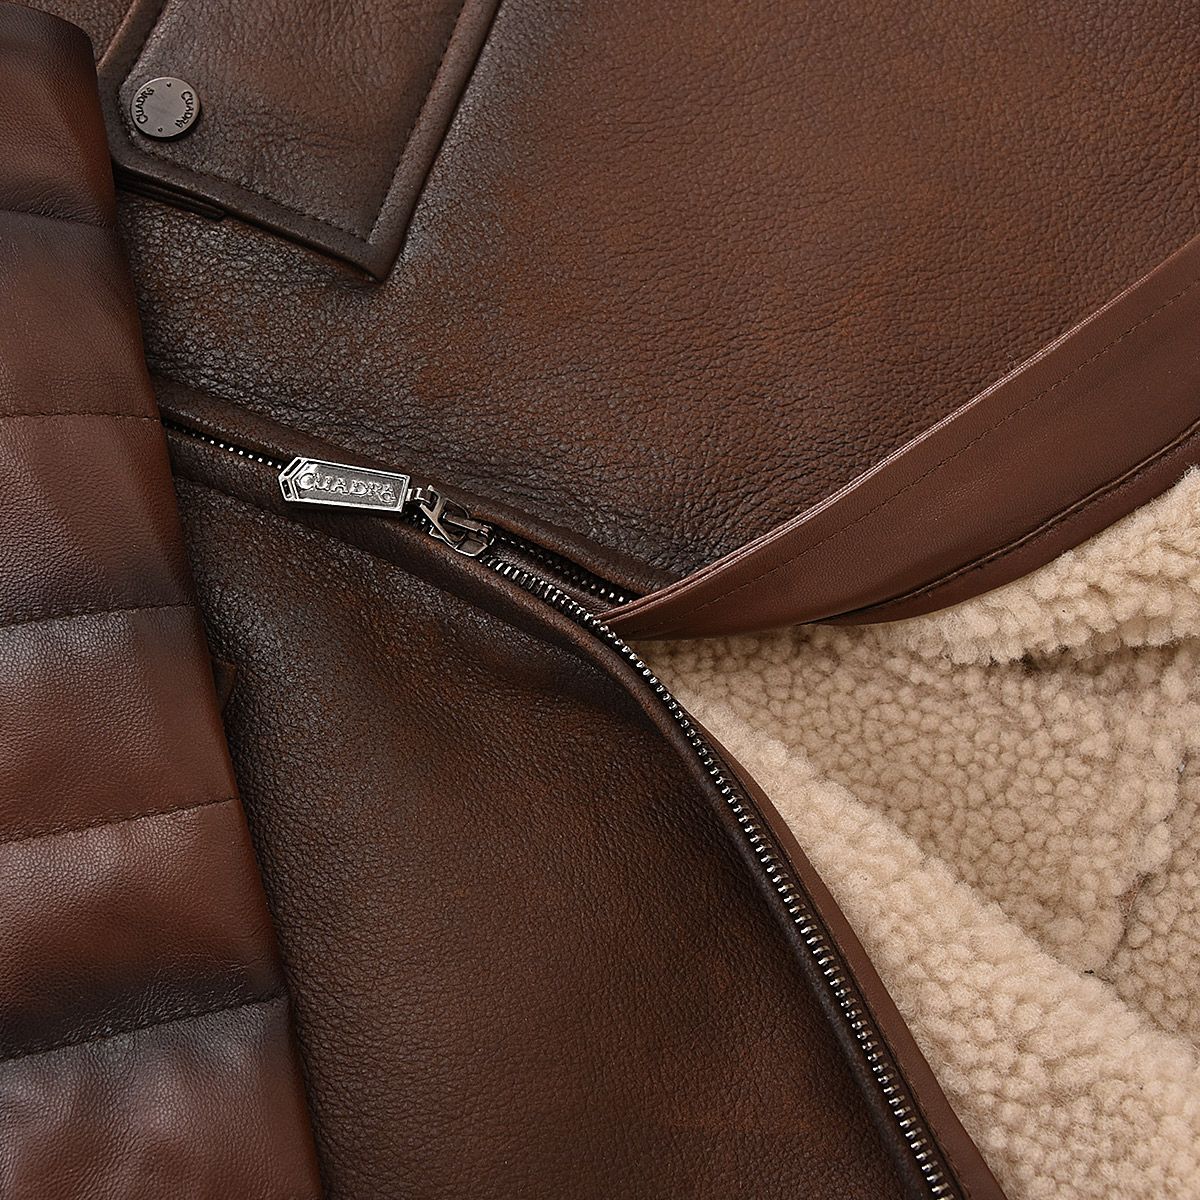 H309BOC - Cuadra brown casual fashion sheepskin leather shearling jacket for men-Kuet.us - Cuadra Boots - Western Cowboy, Casual Fashion and Dress Boots